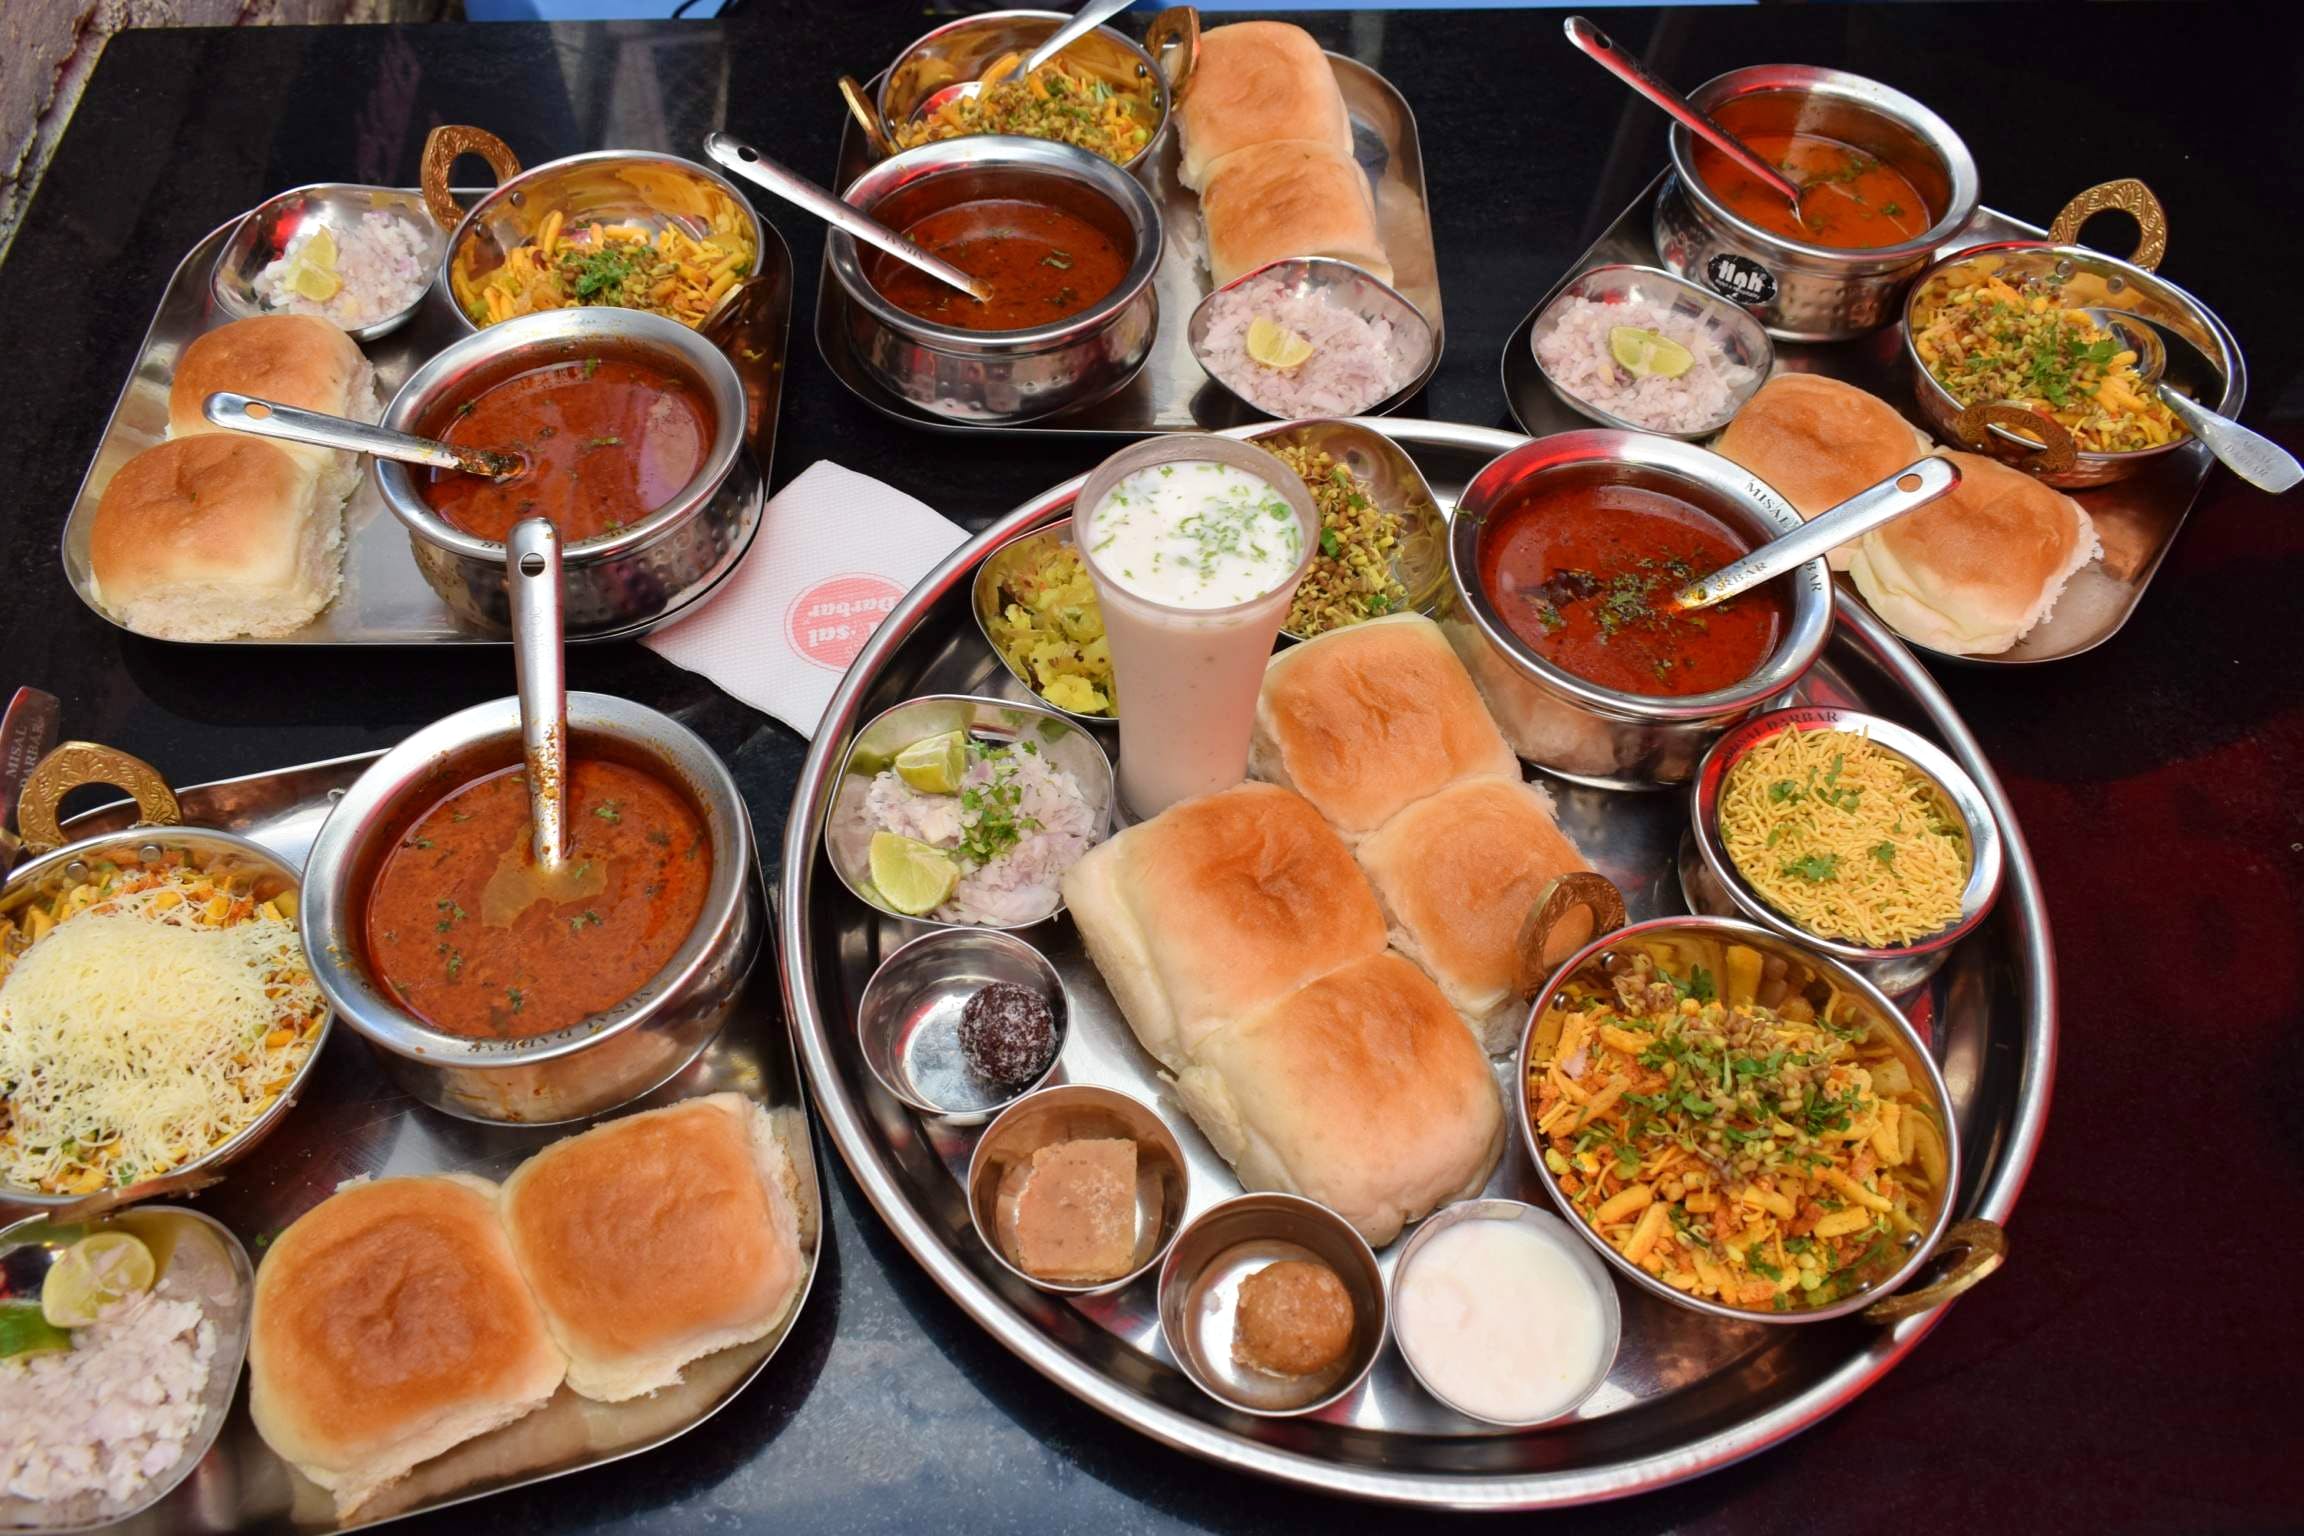 Dish,Food,Cuisine,Meal,Ingredient,Brunch,Lunch,Indian cuisine,Vegetarian food,Produce